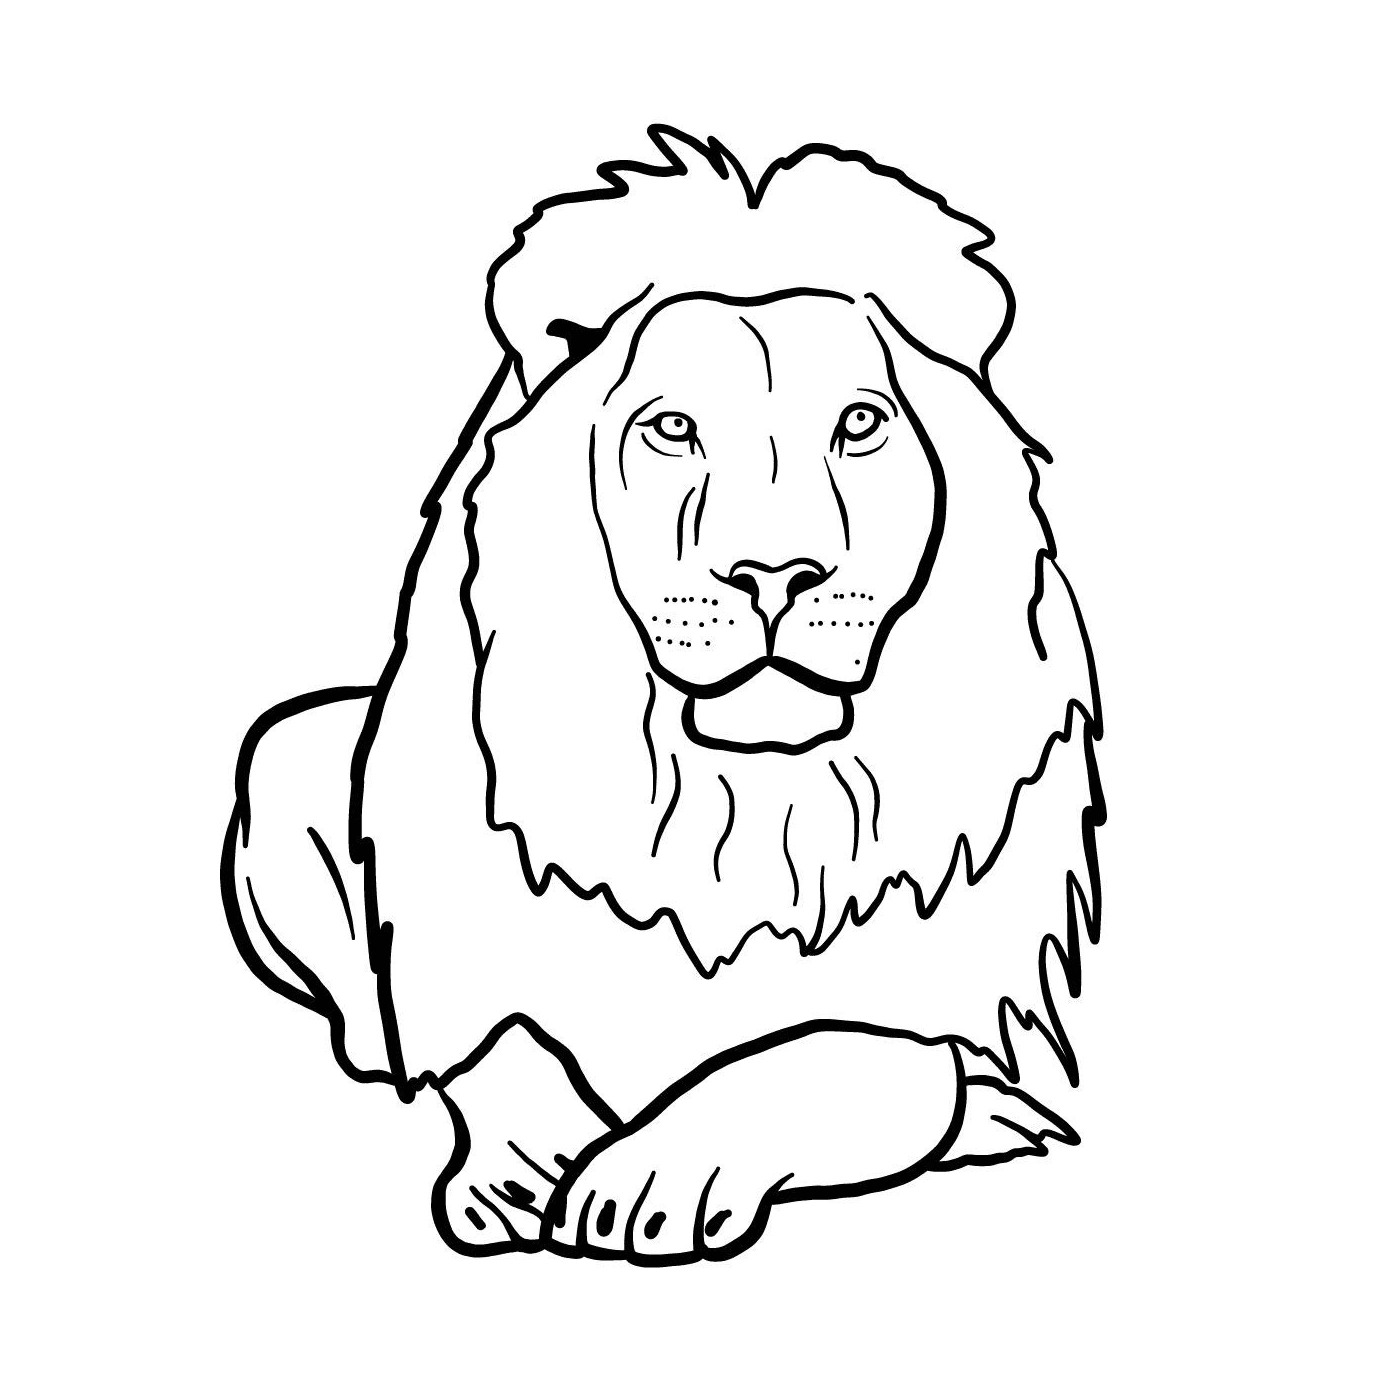  A lioness 